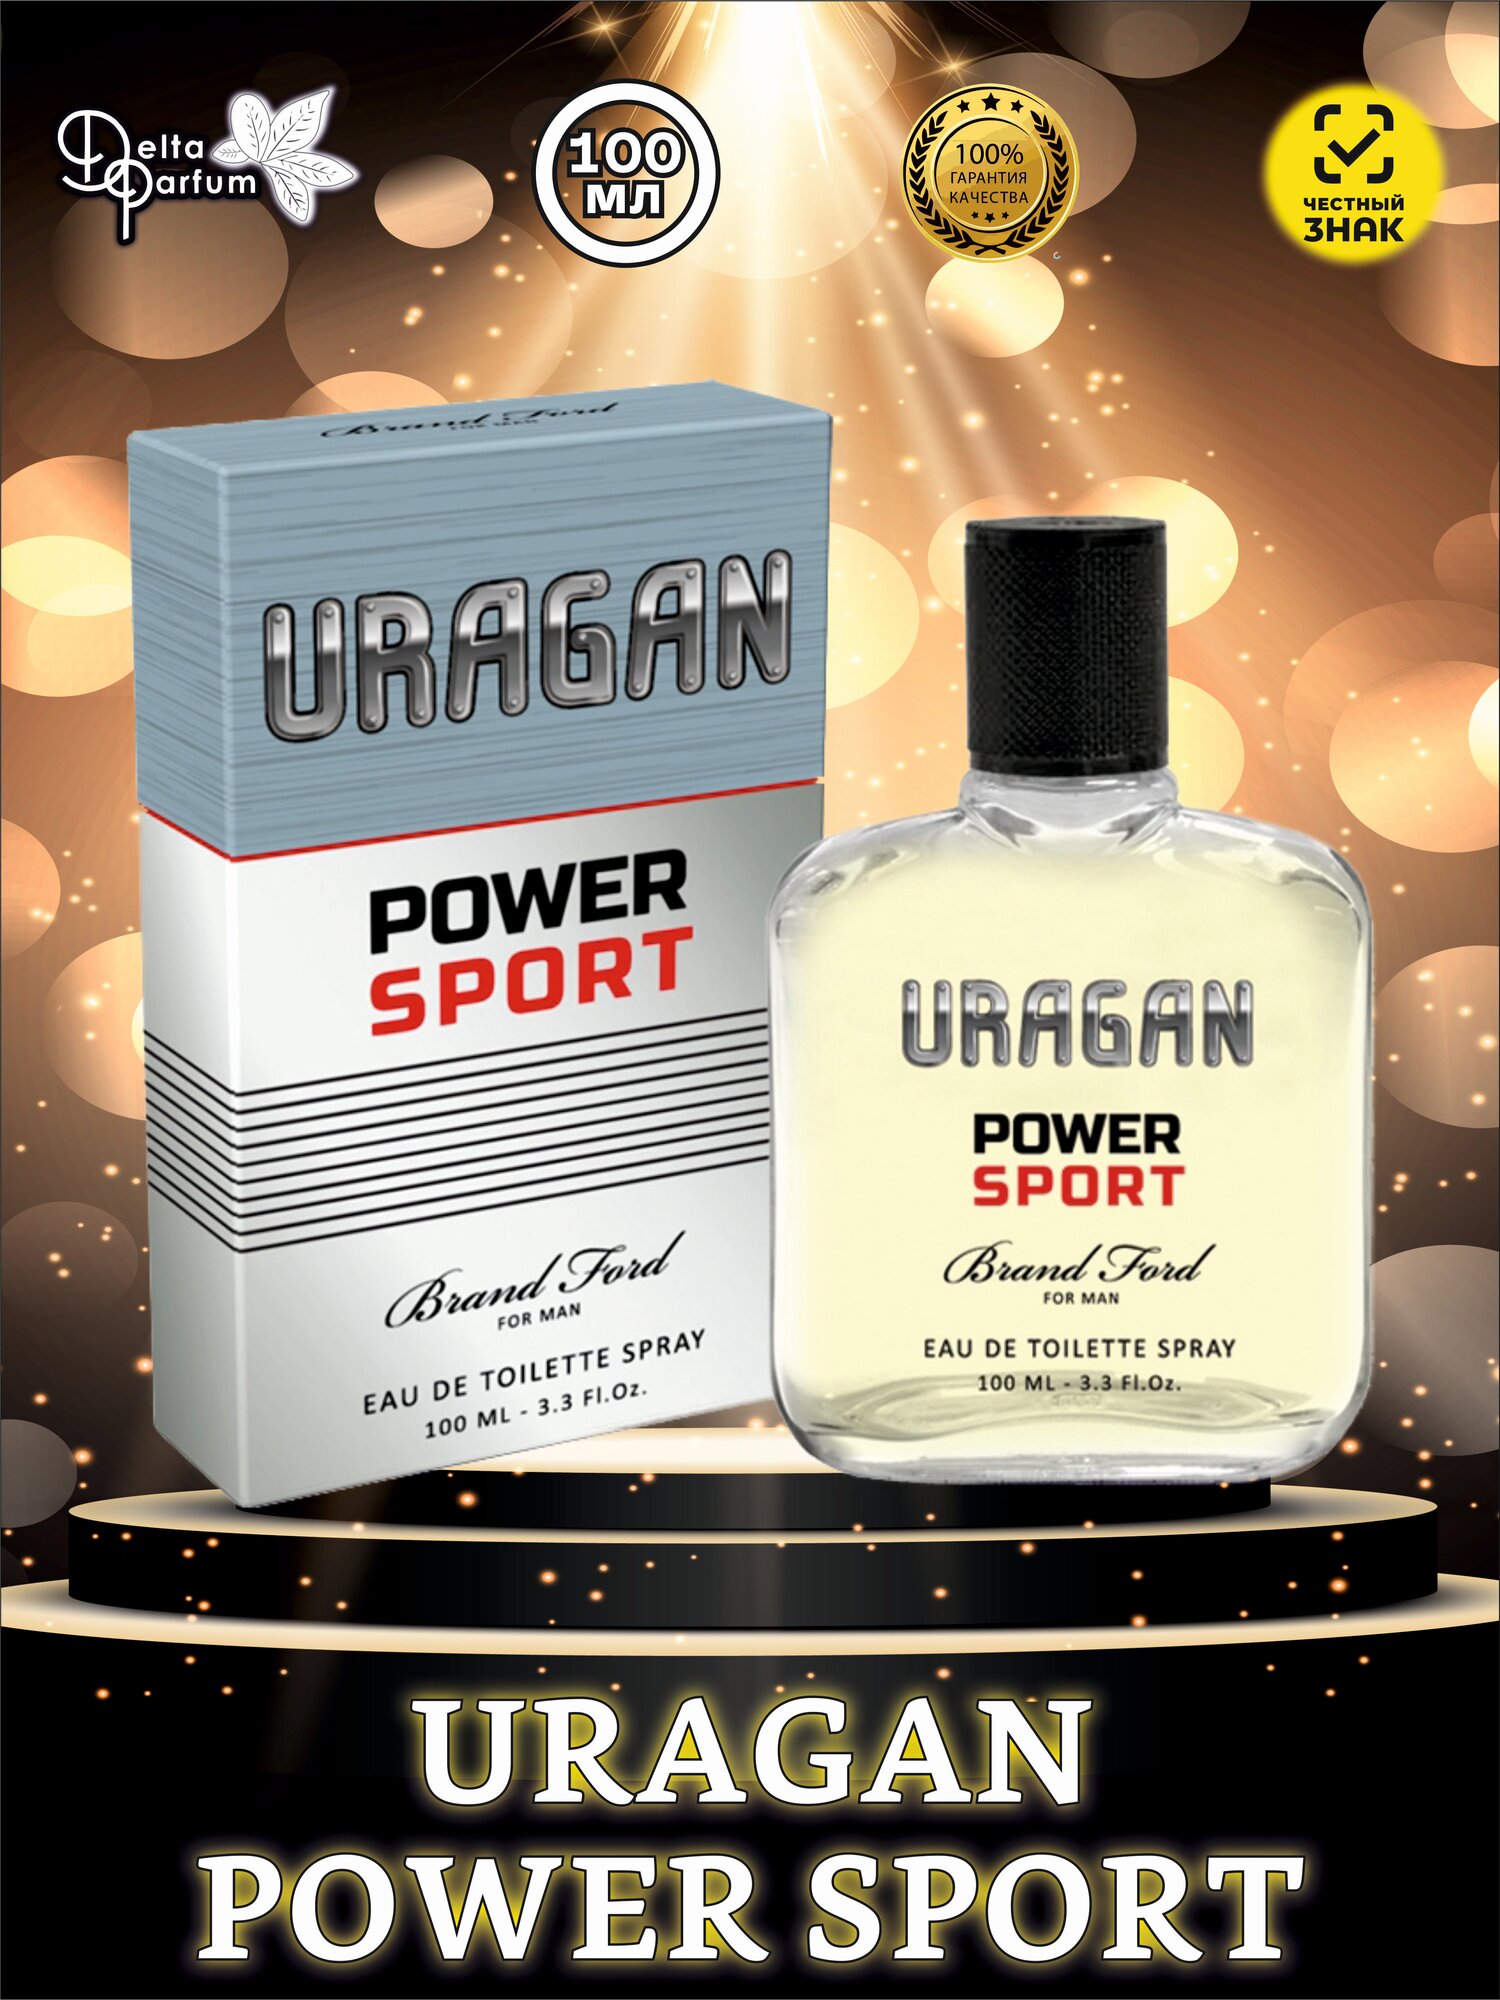 Brand Ford (Delta parfum) Туалетная вода мужская URAGAN POWER SPORT